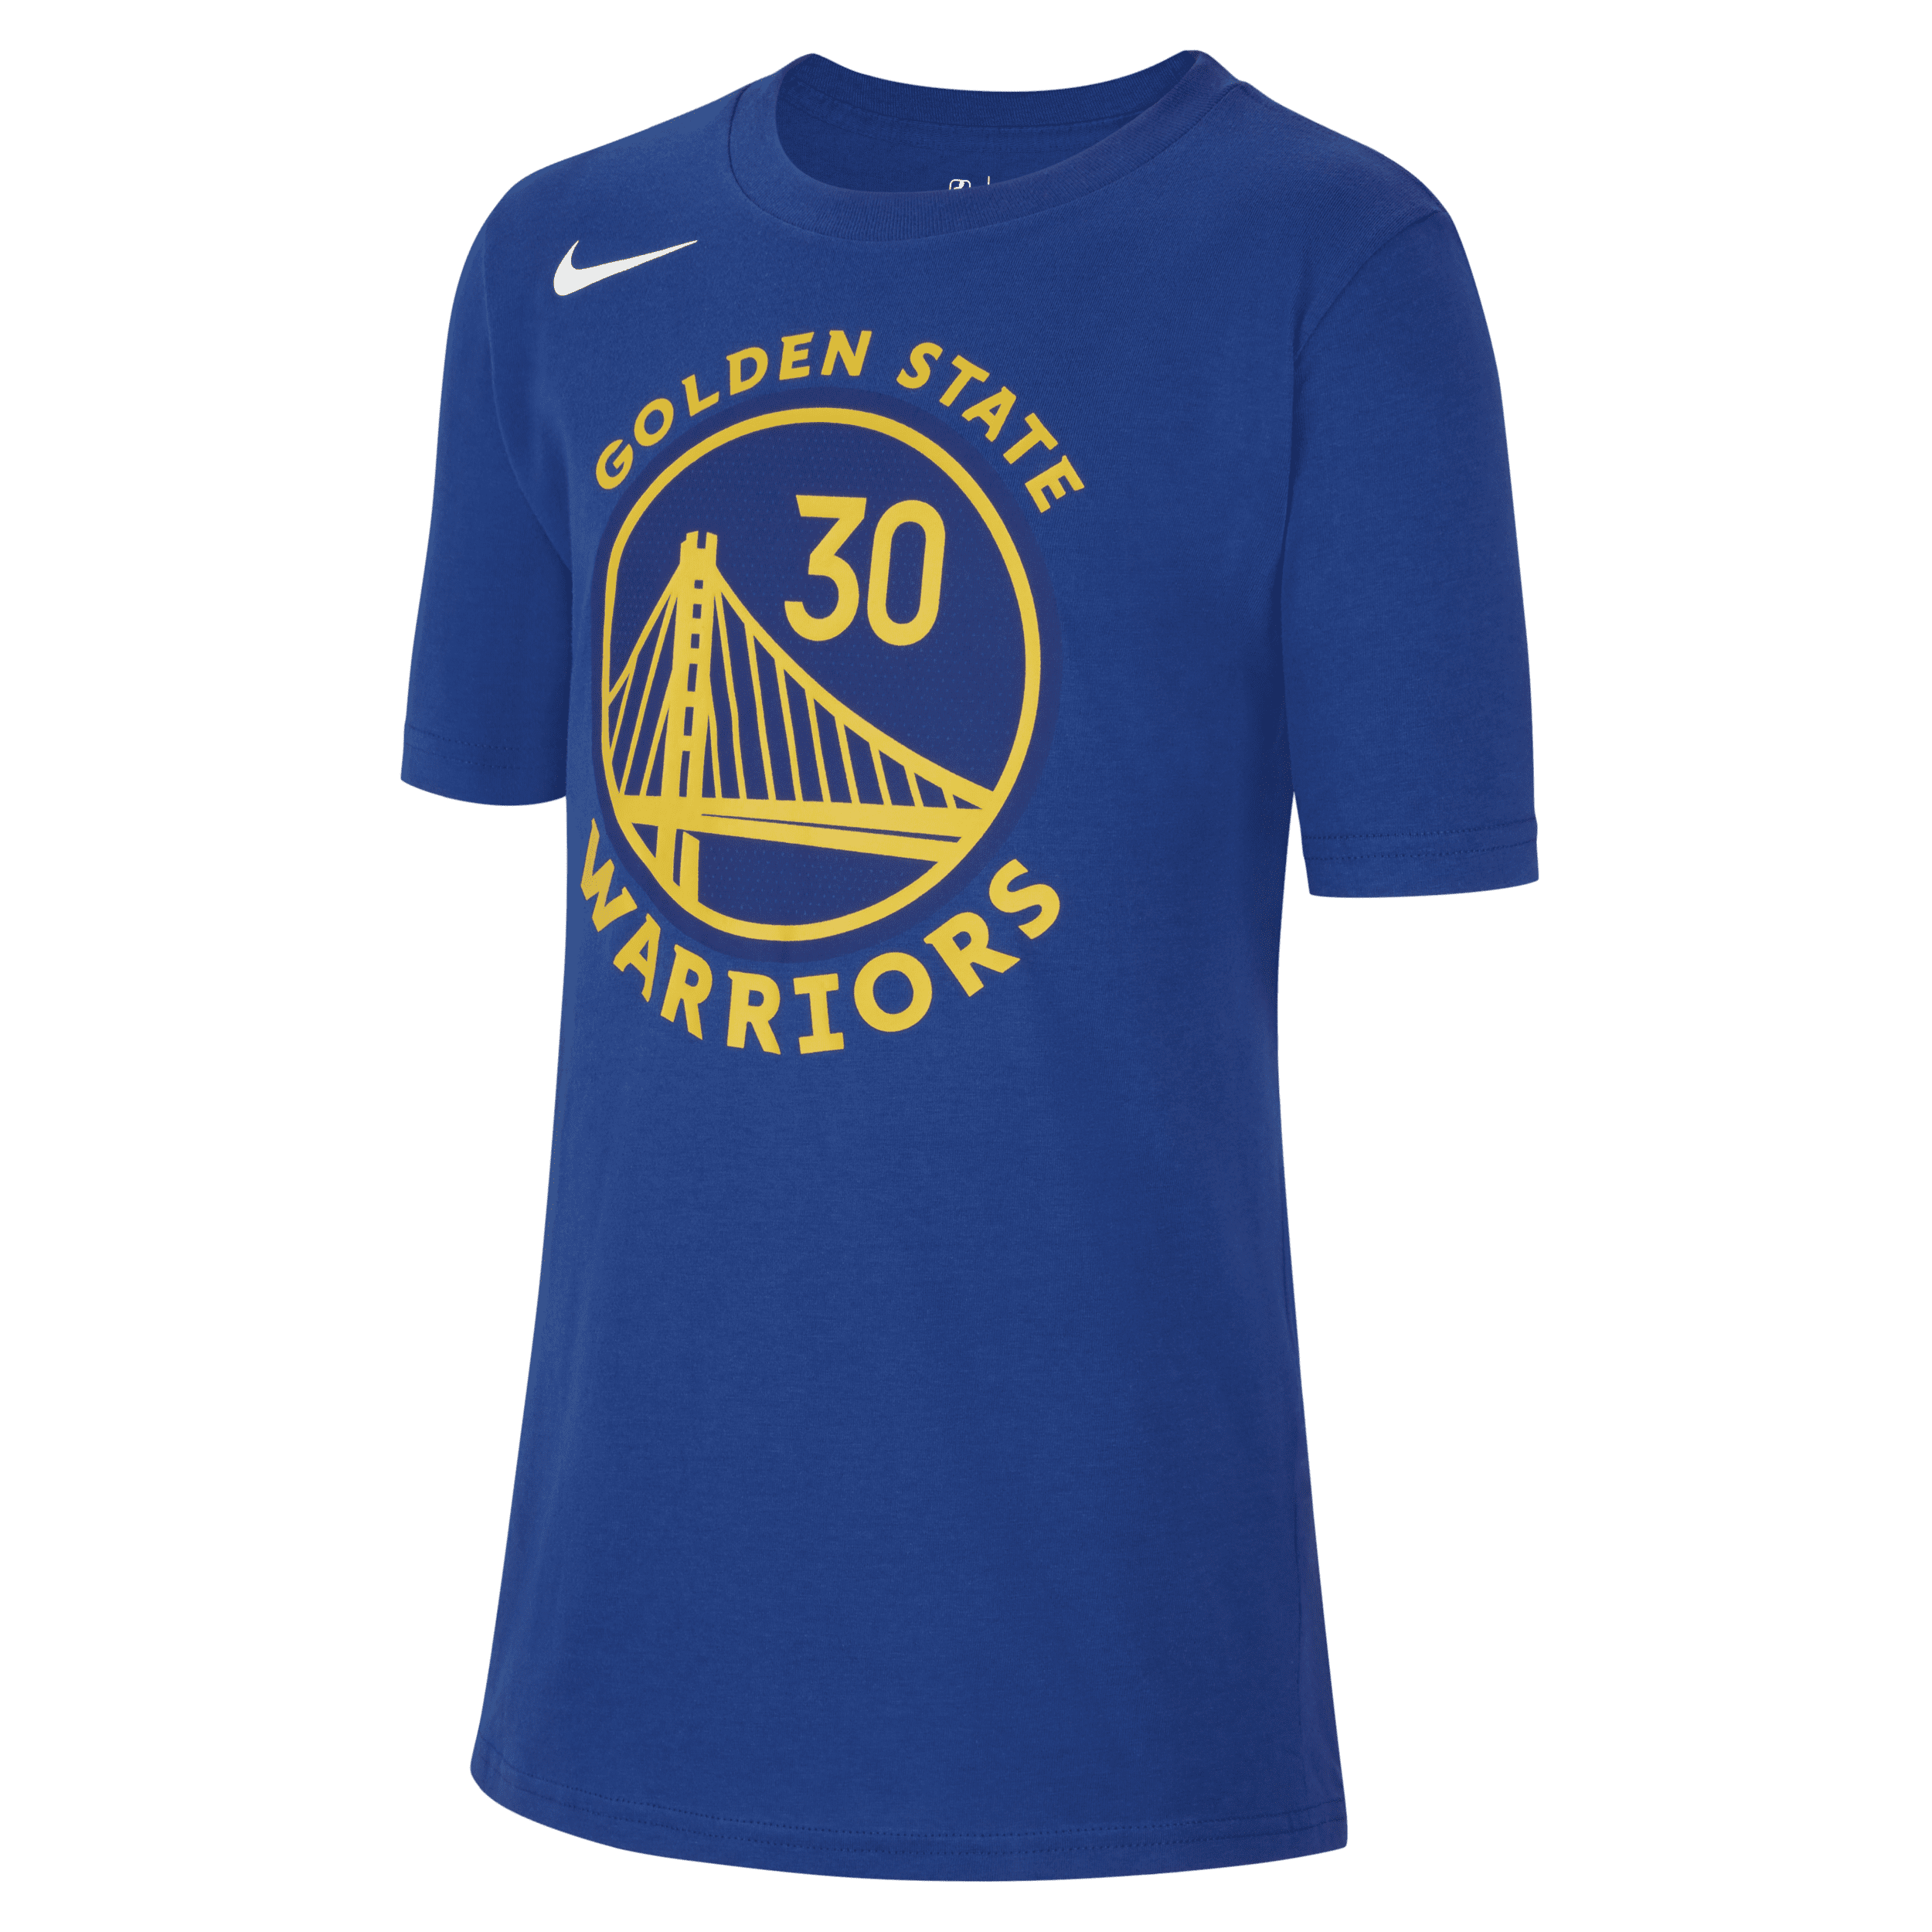 Golden State Warriors Camiseta Nike NBA - Niño/a - Azul